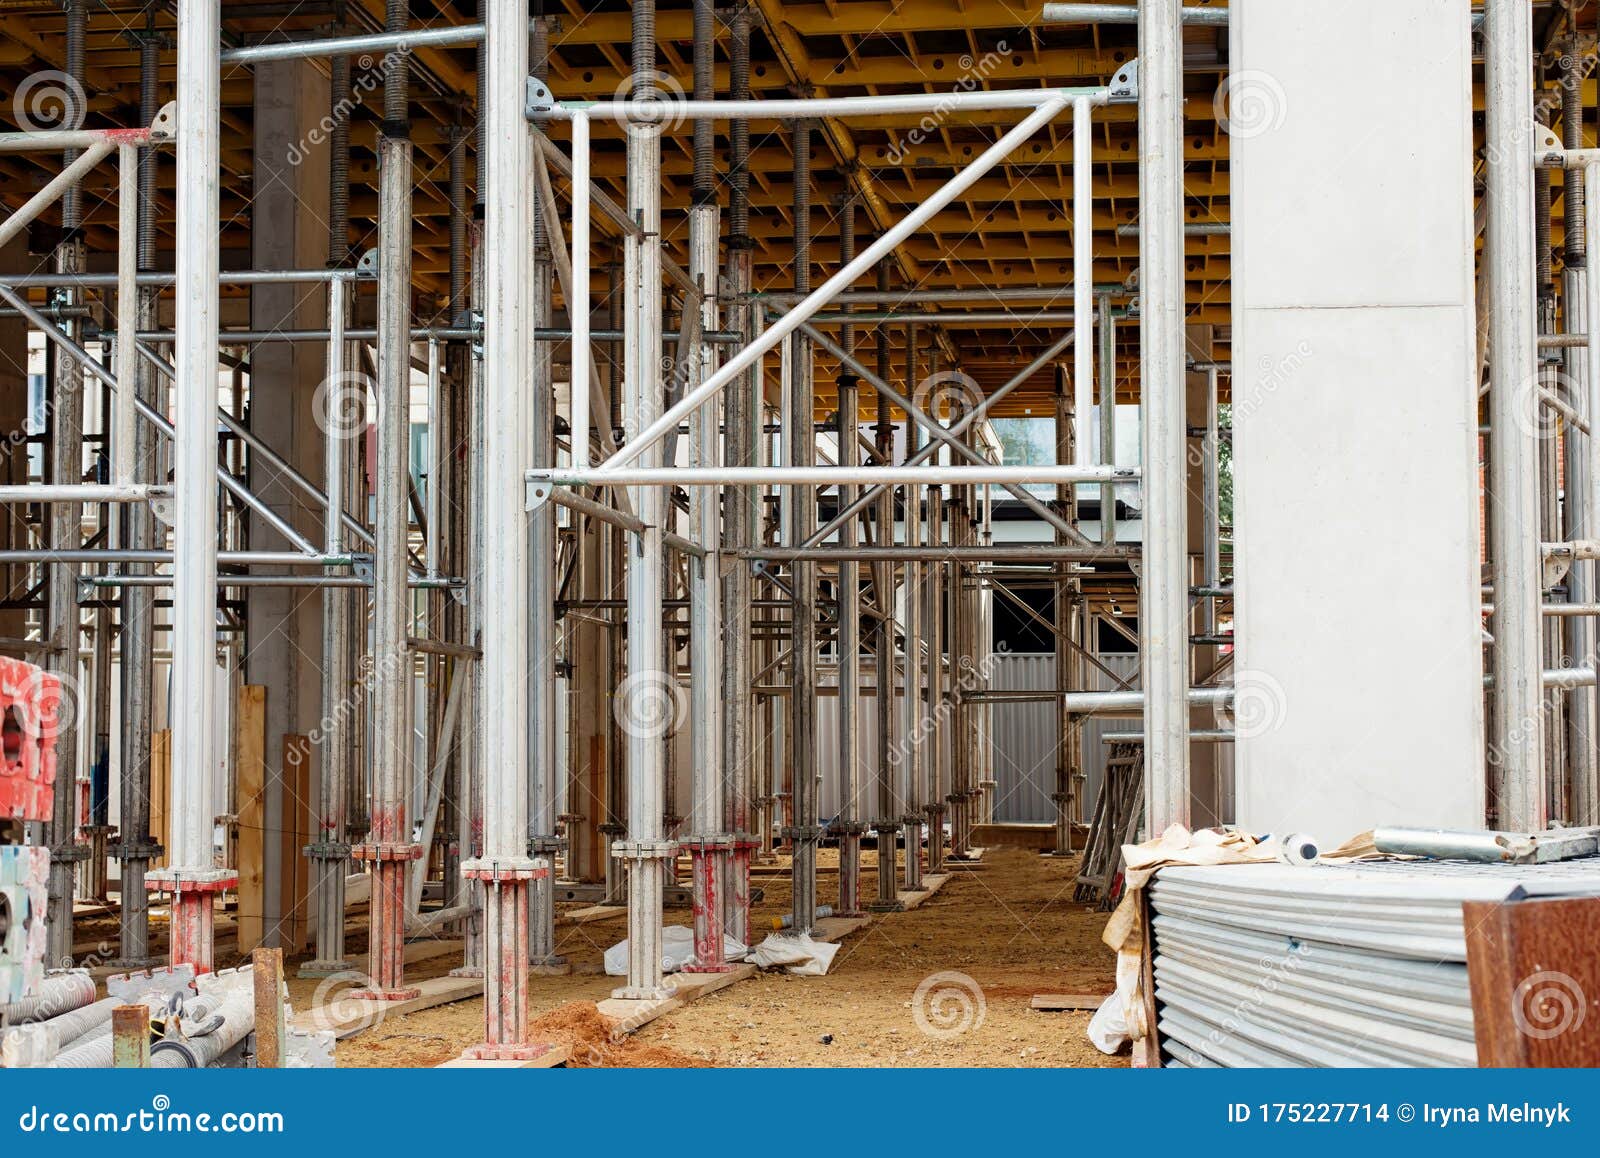 falsework decking system legs for construction of suspended reinforced concrete slab